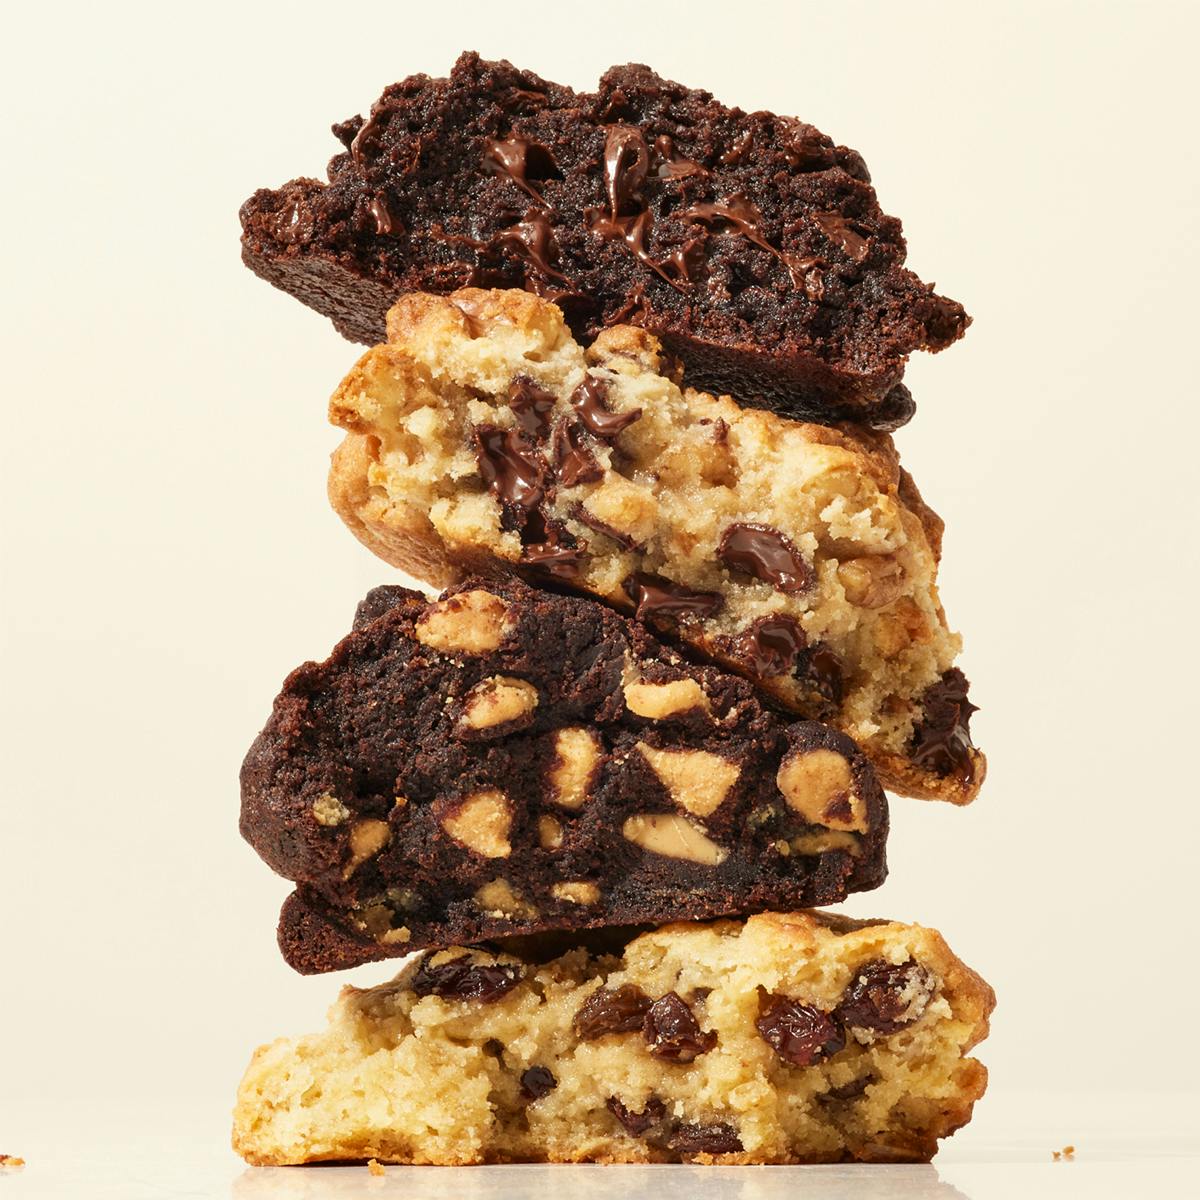 Big, Gooey Cookies from Levain Bakery - YouTube